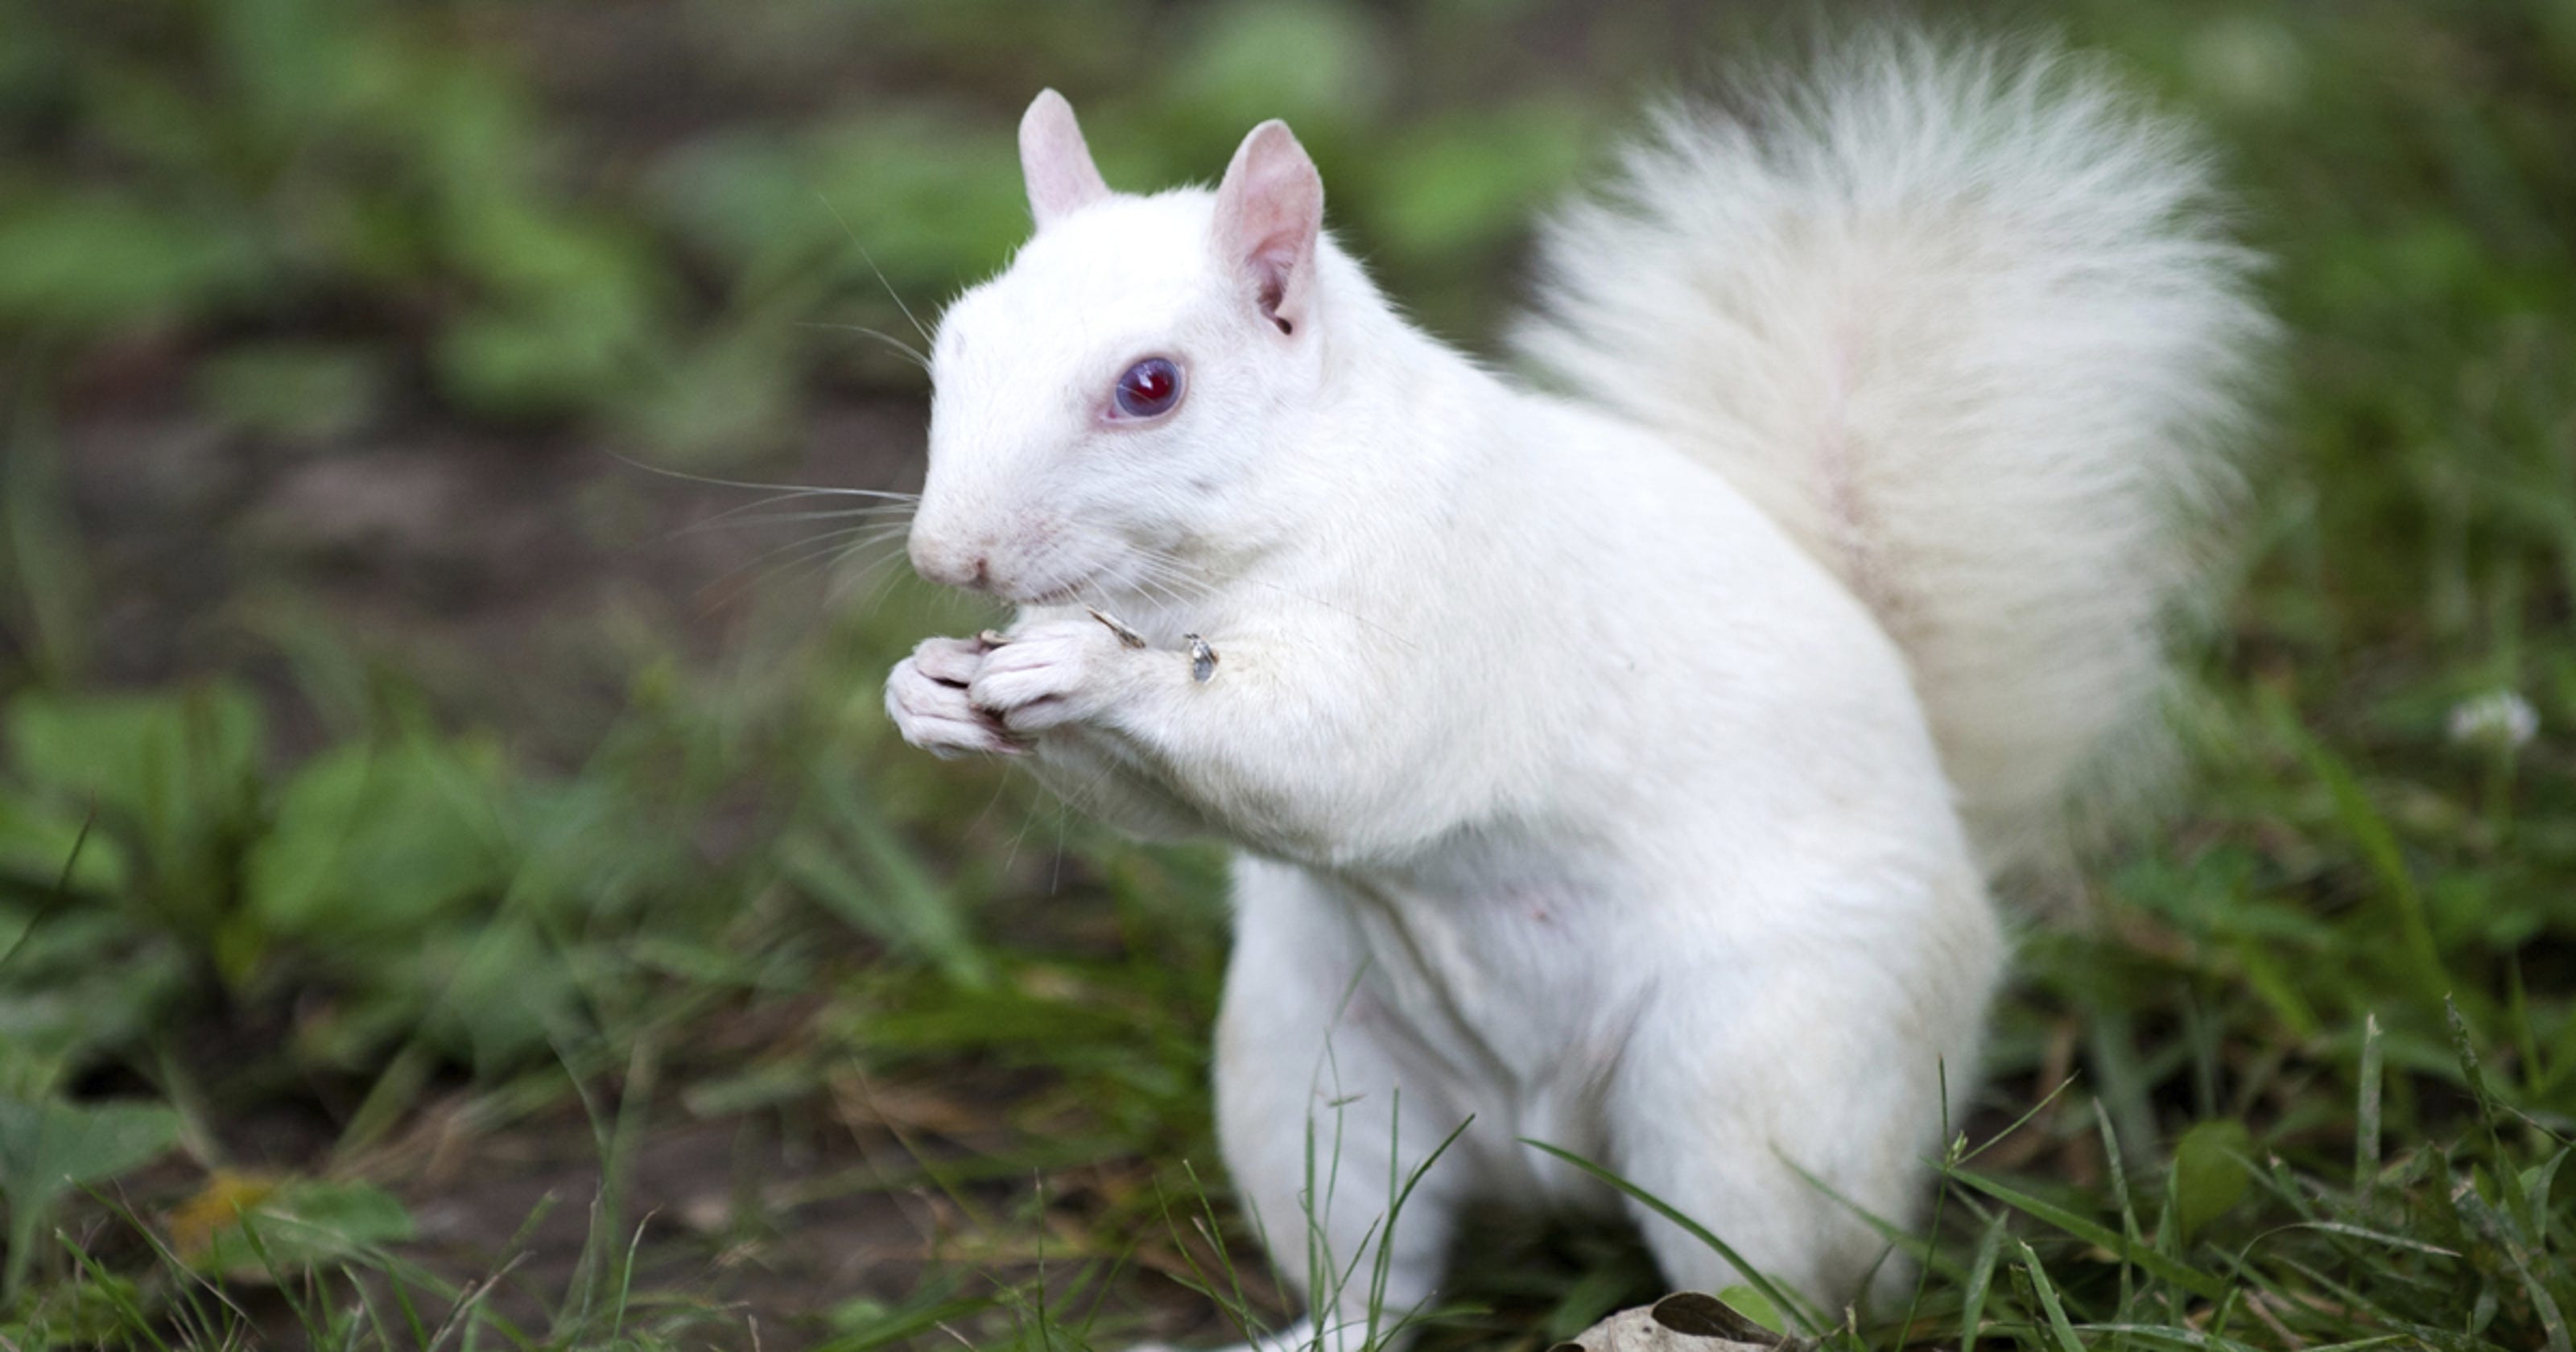 Celebrate Groundhog Day Plus White Squirrels This Weekend 